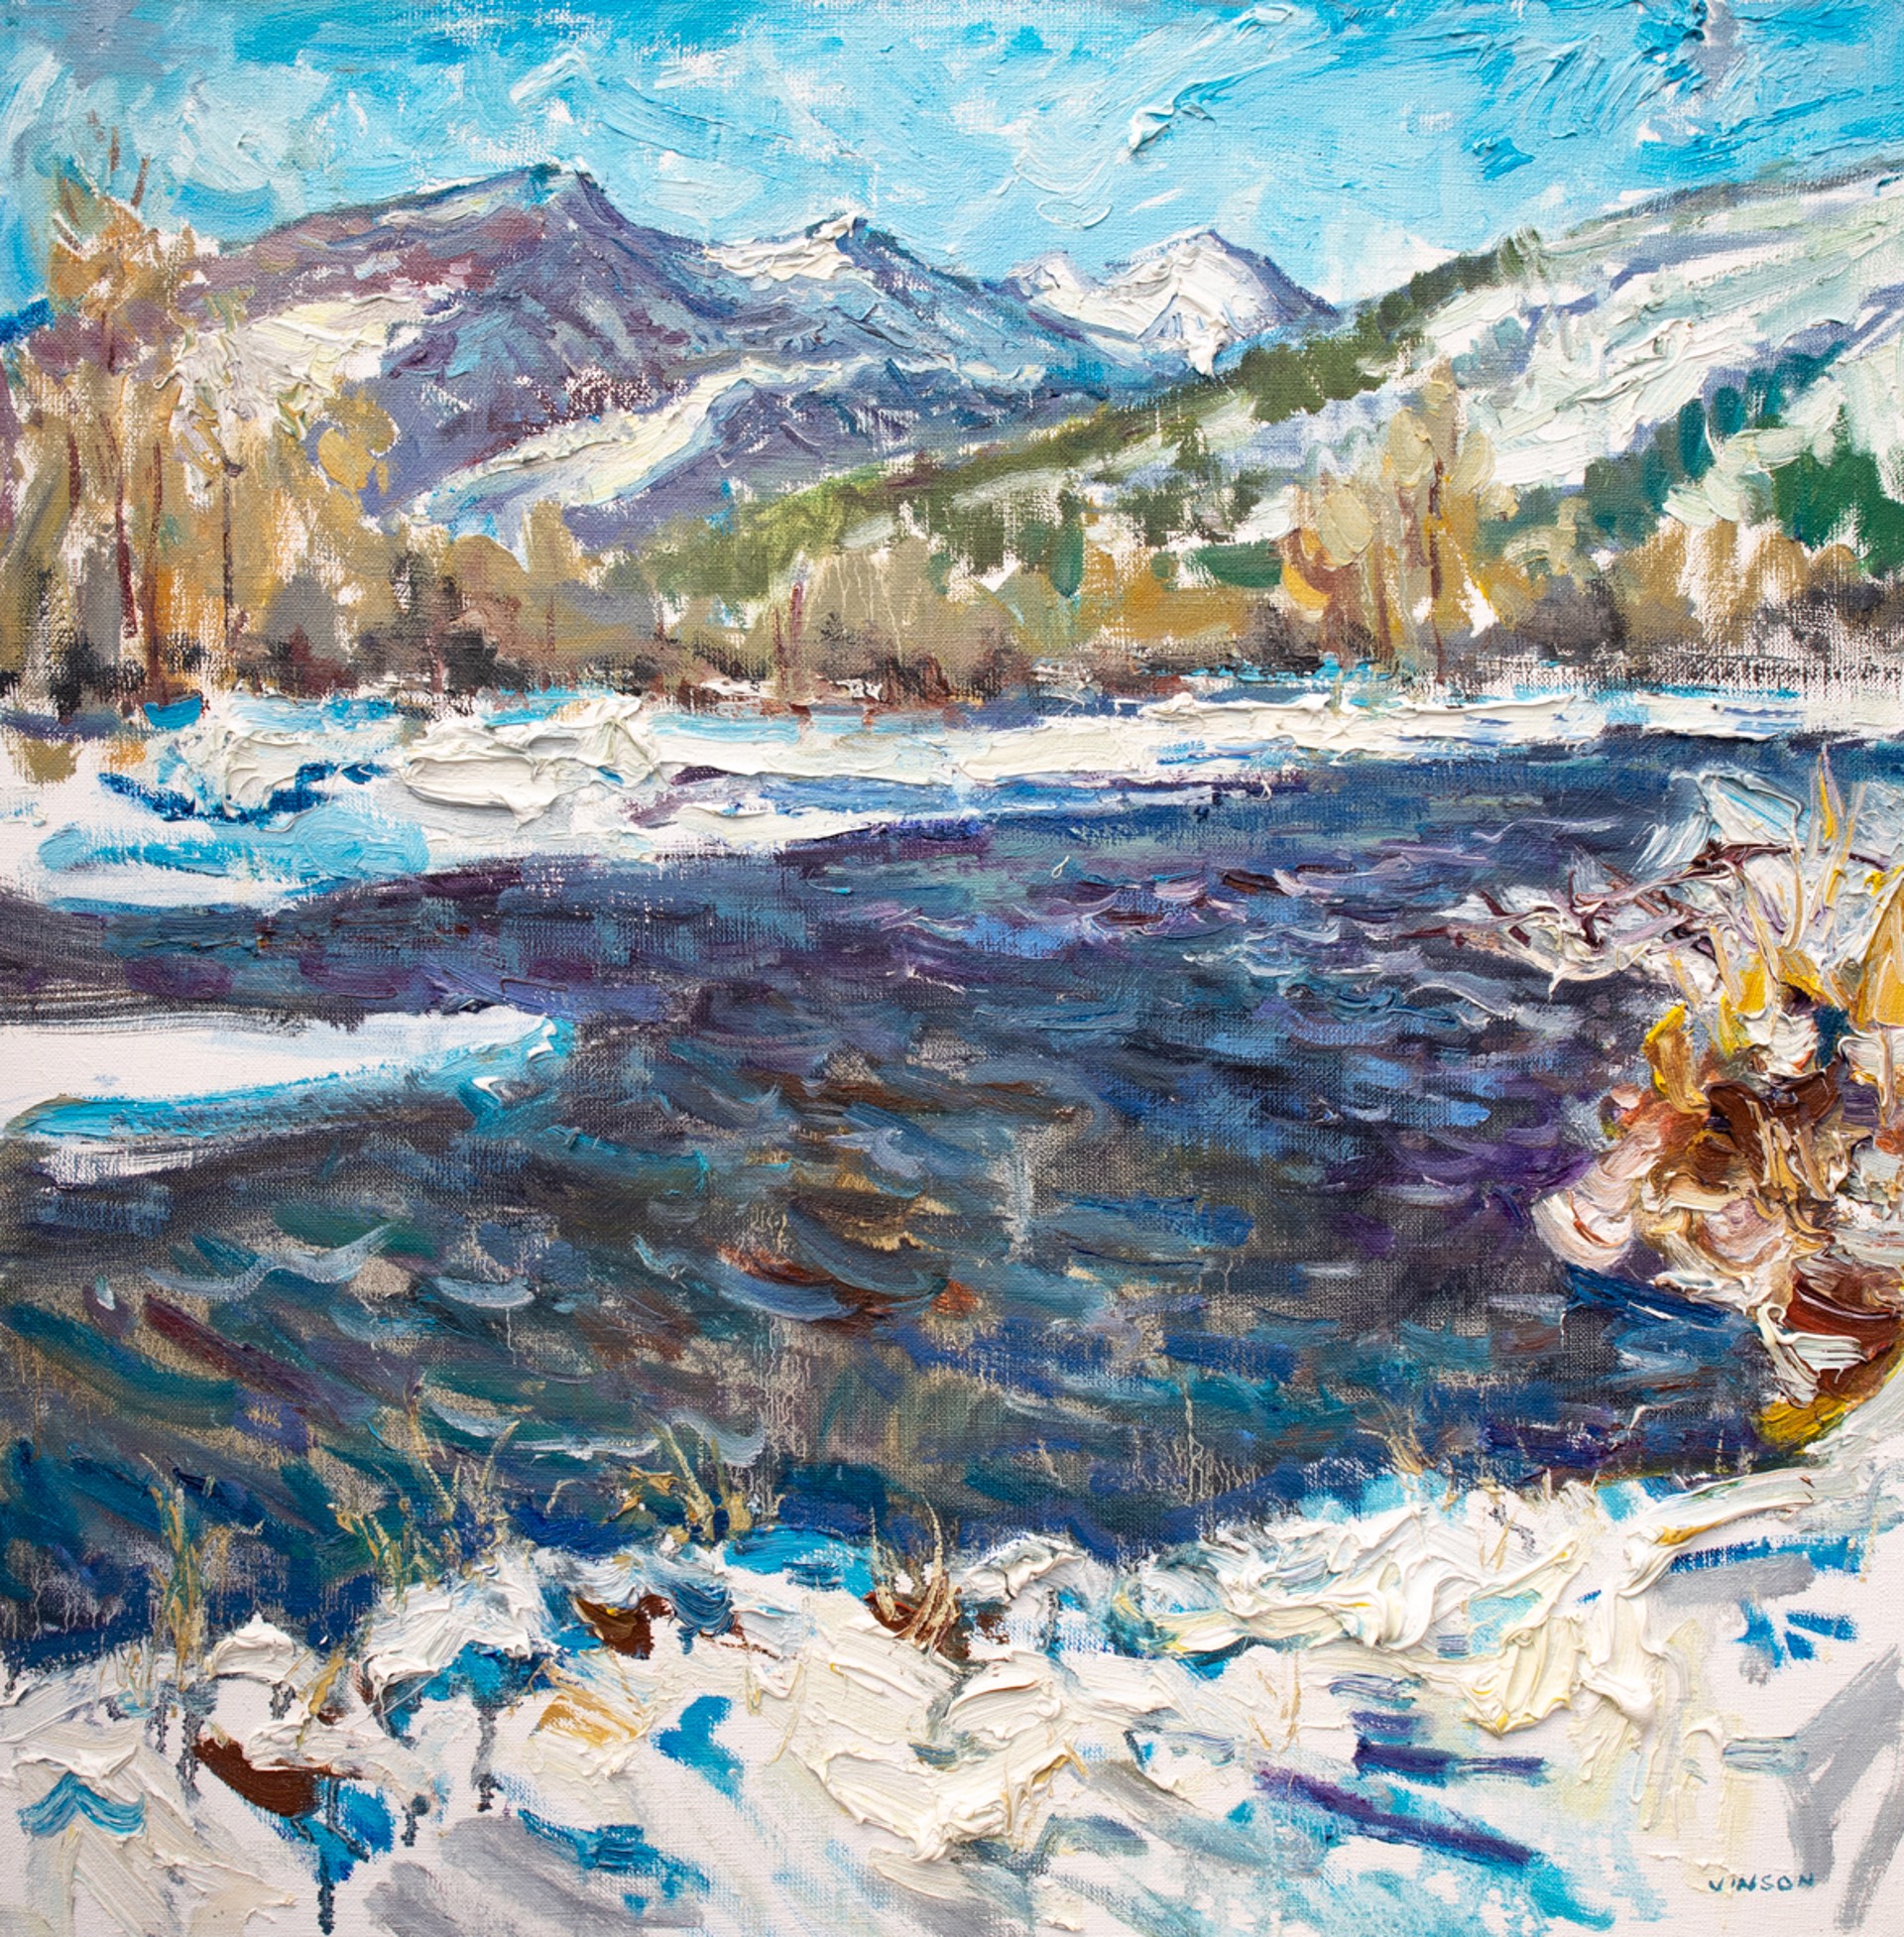 Skalkaho Bend in Winter by Turner Vinson